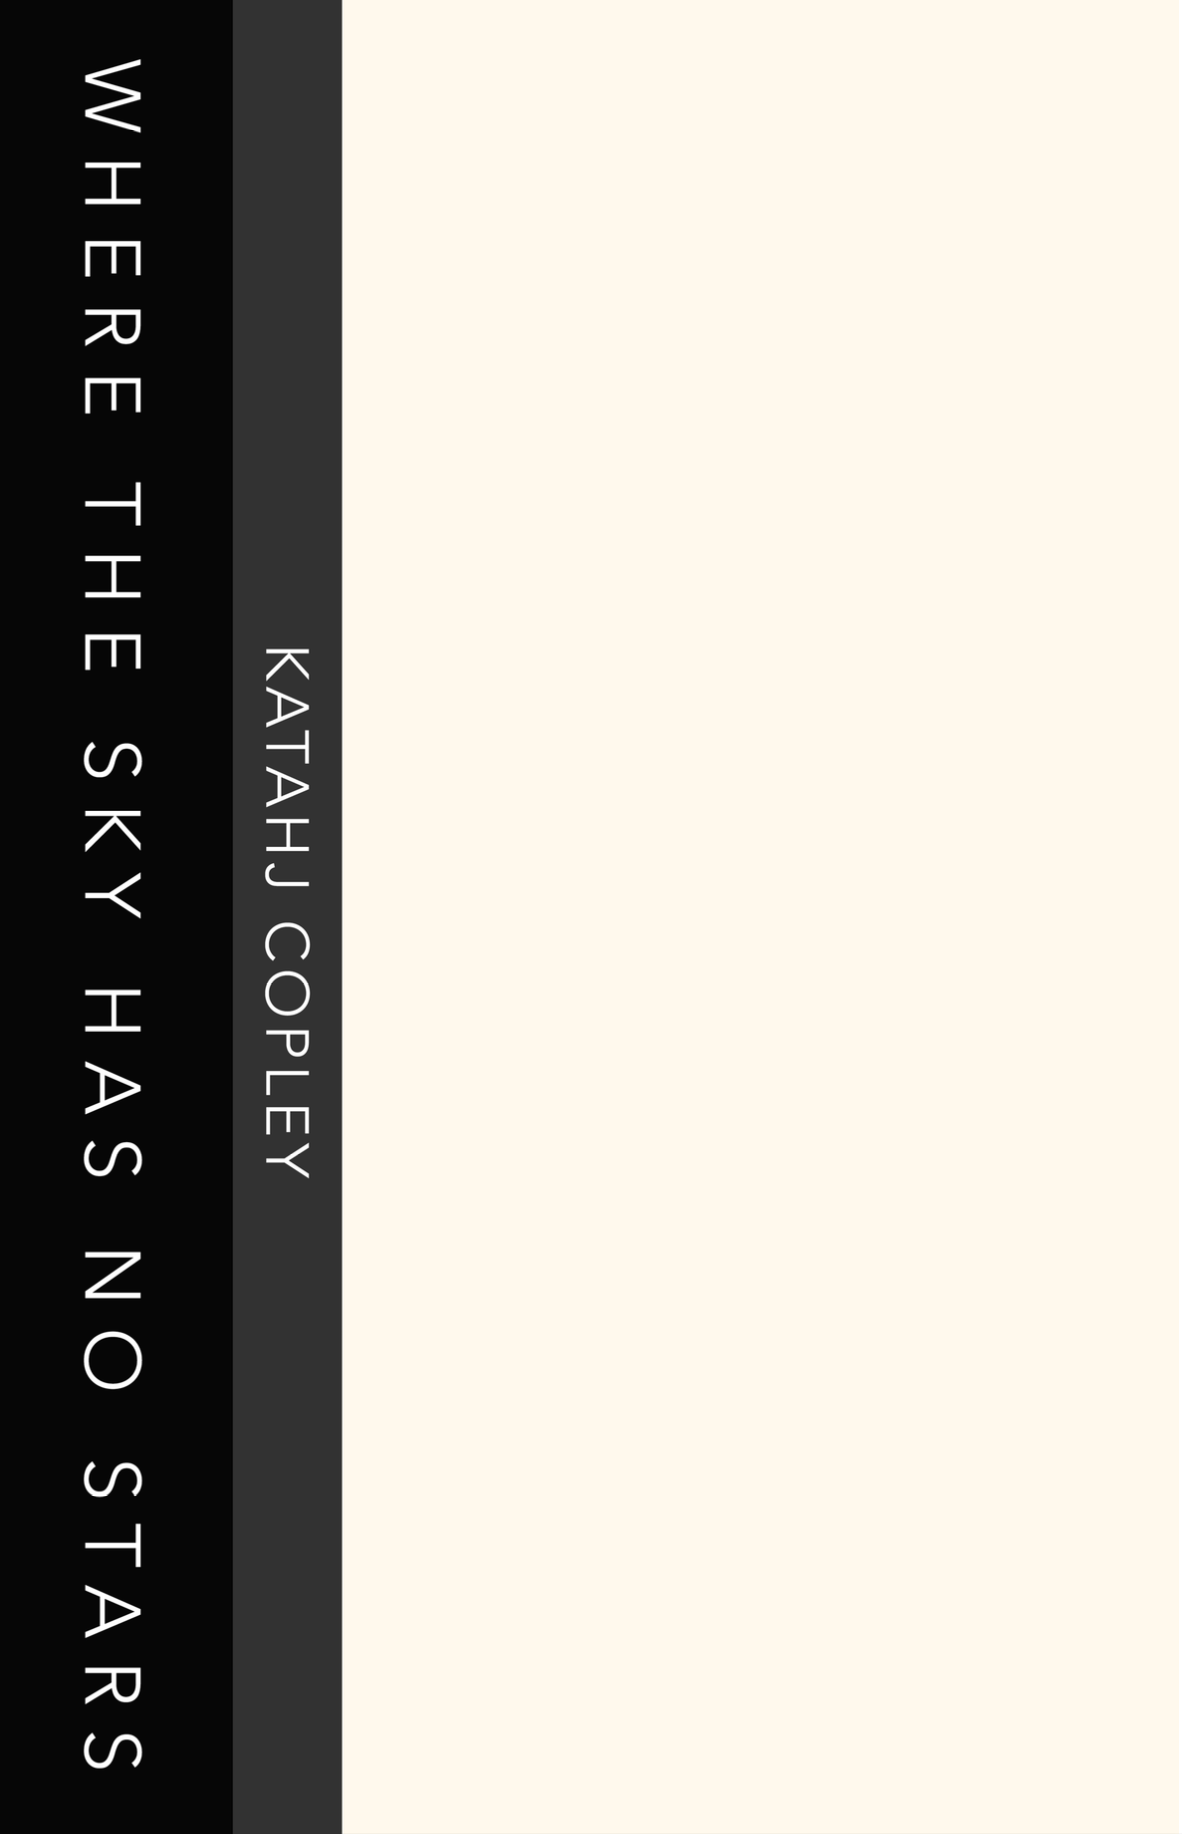 Where The Sky Has No Stars (Score Only) by Katahj Copley